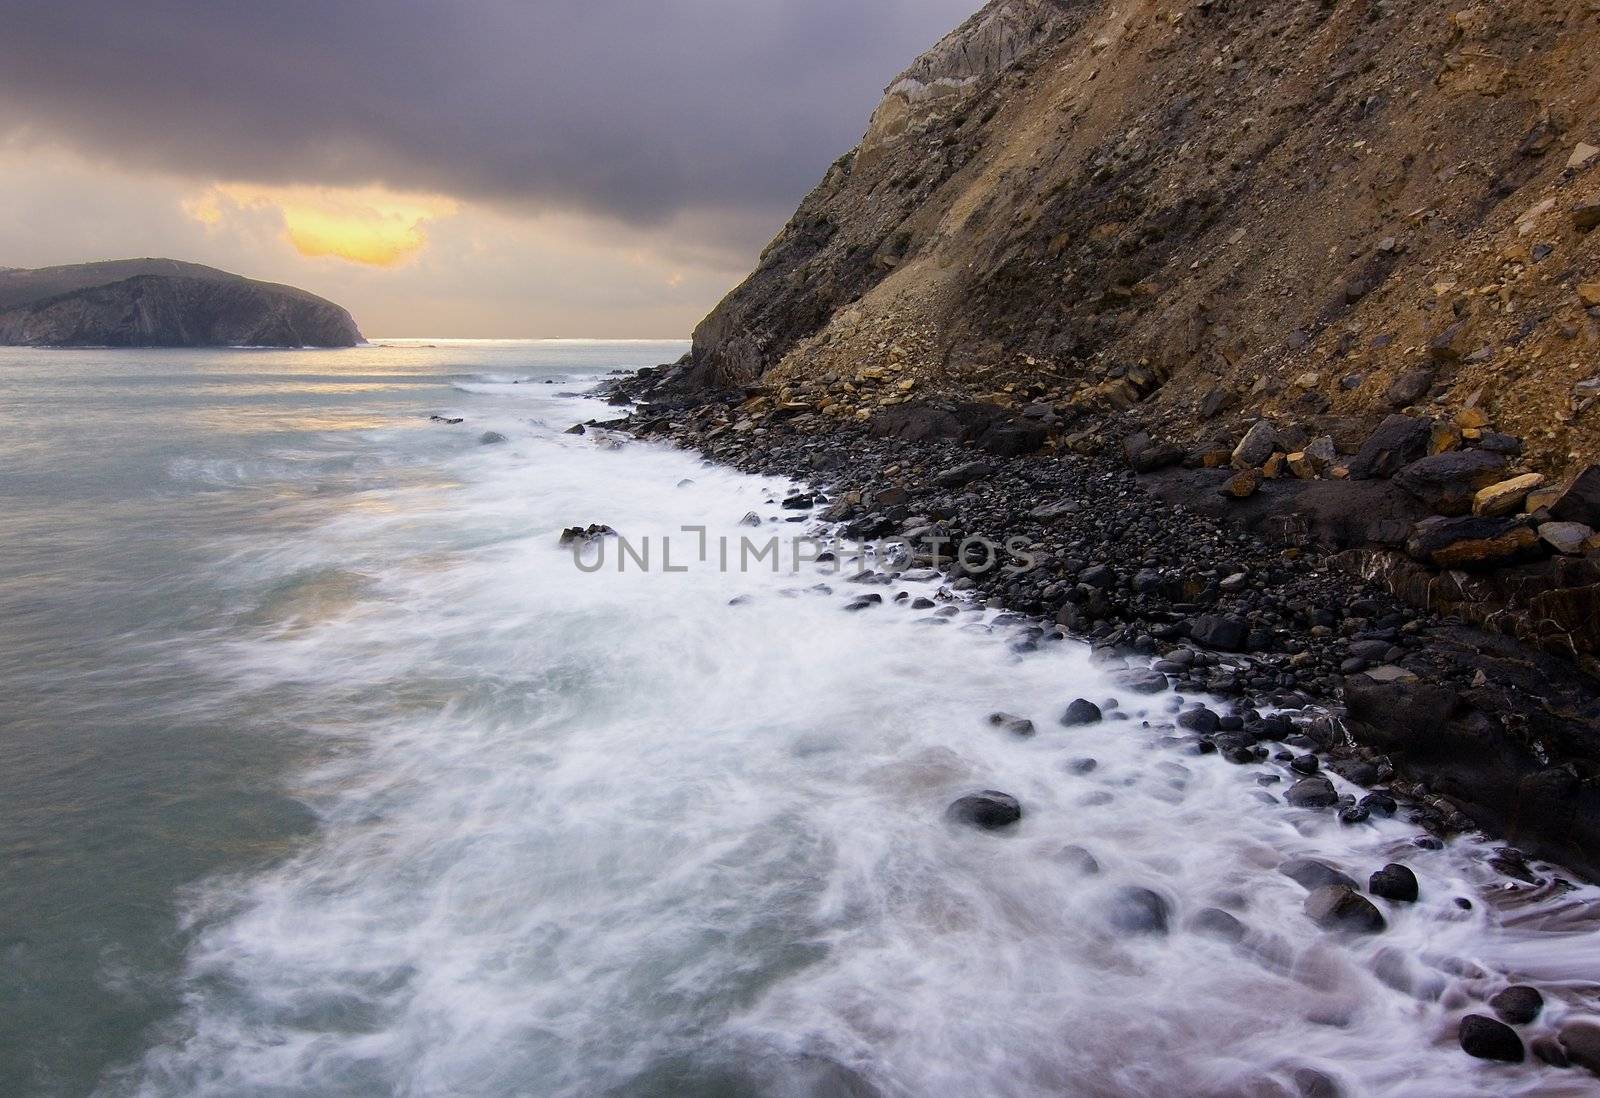 Calm image of the rocks in the sea shore